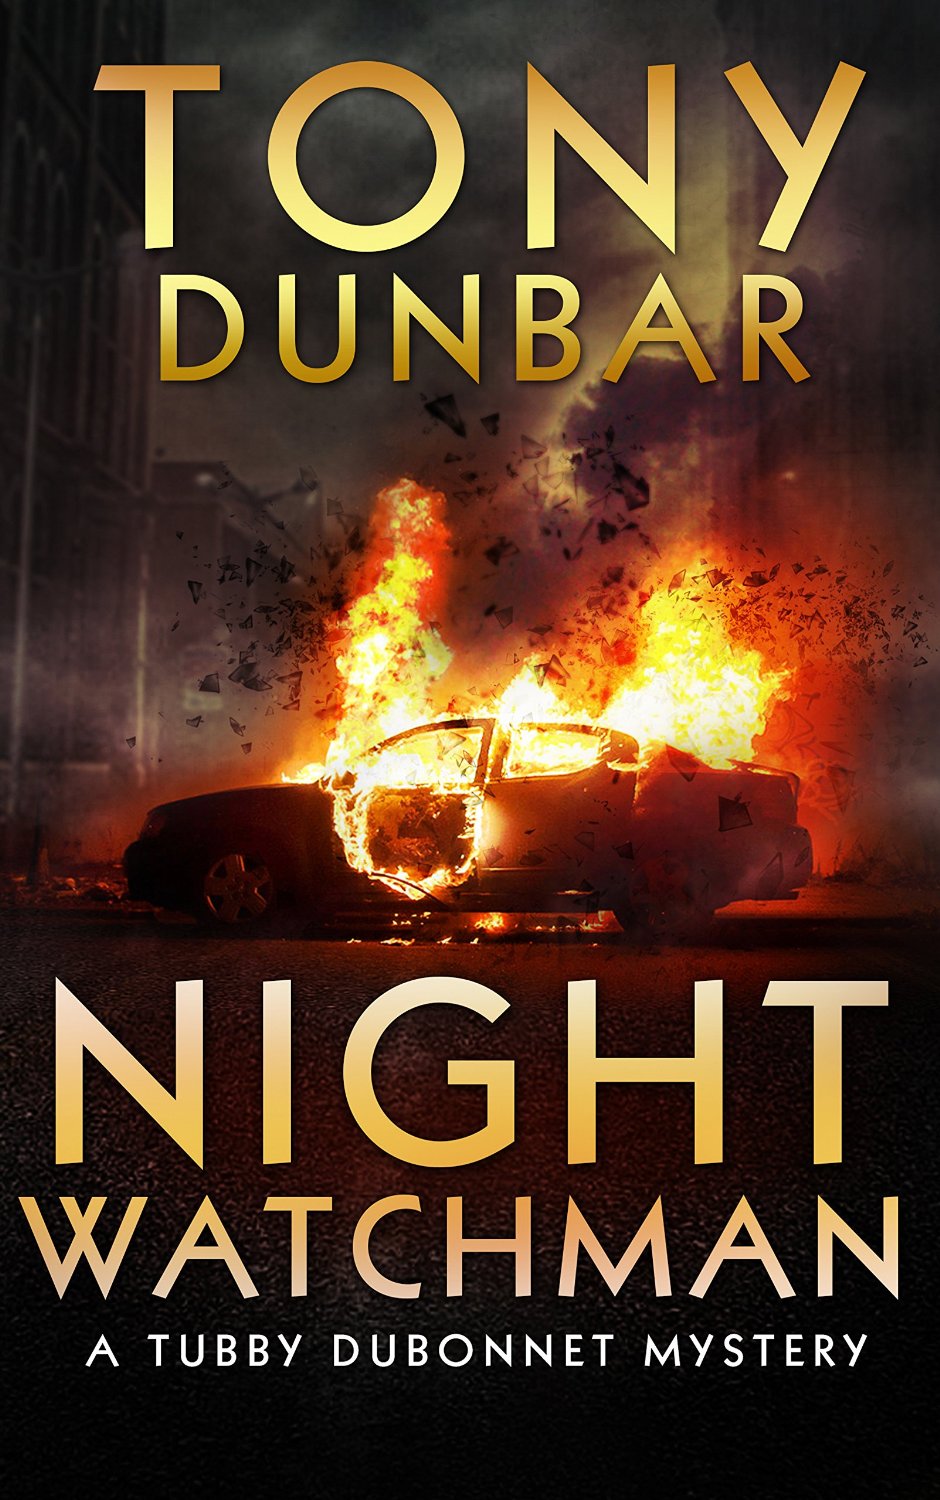 Night Watchman (The Tubby Dubonnet Series Book 8) by Tony Dunbar